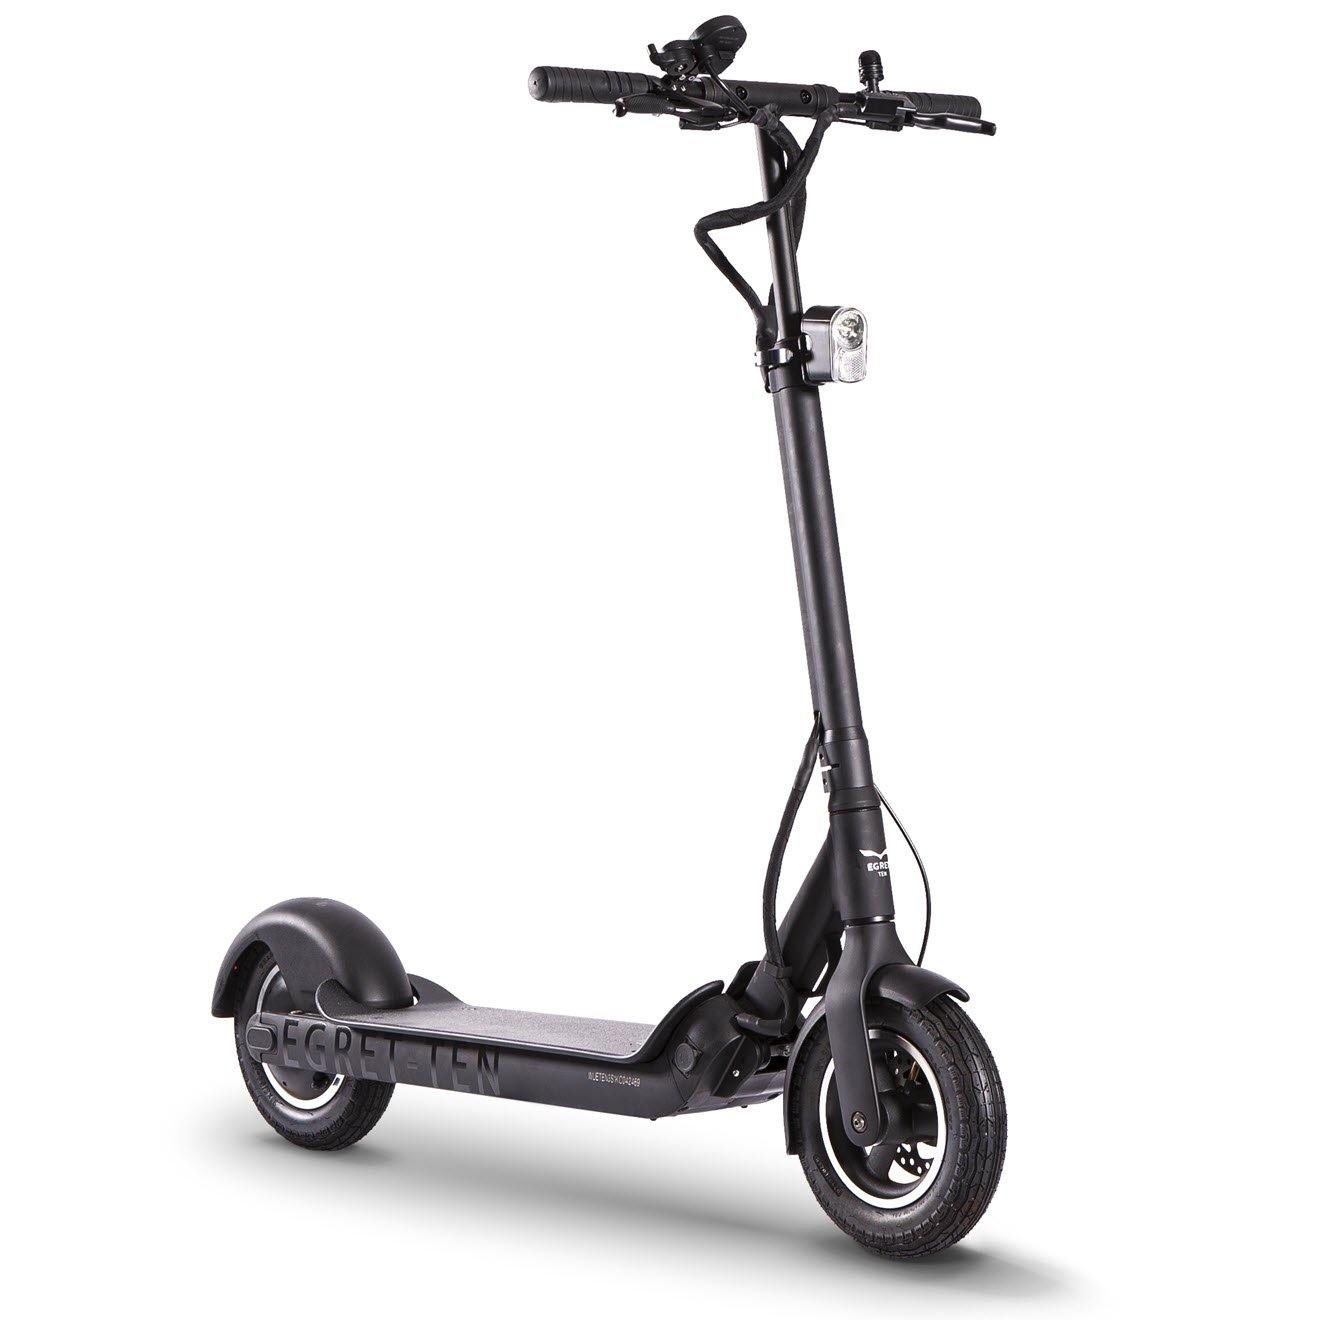 Egret-Ten v3 X 48v 350W Electric Scooter – Generation Electric